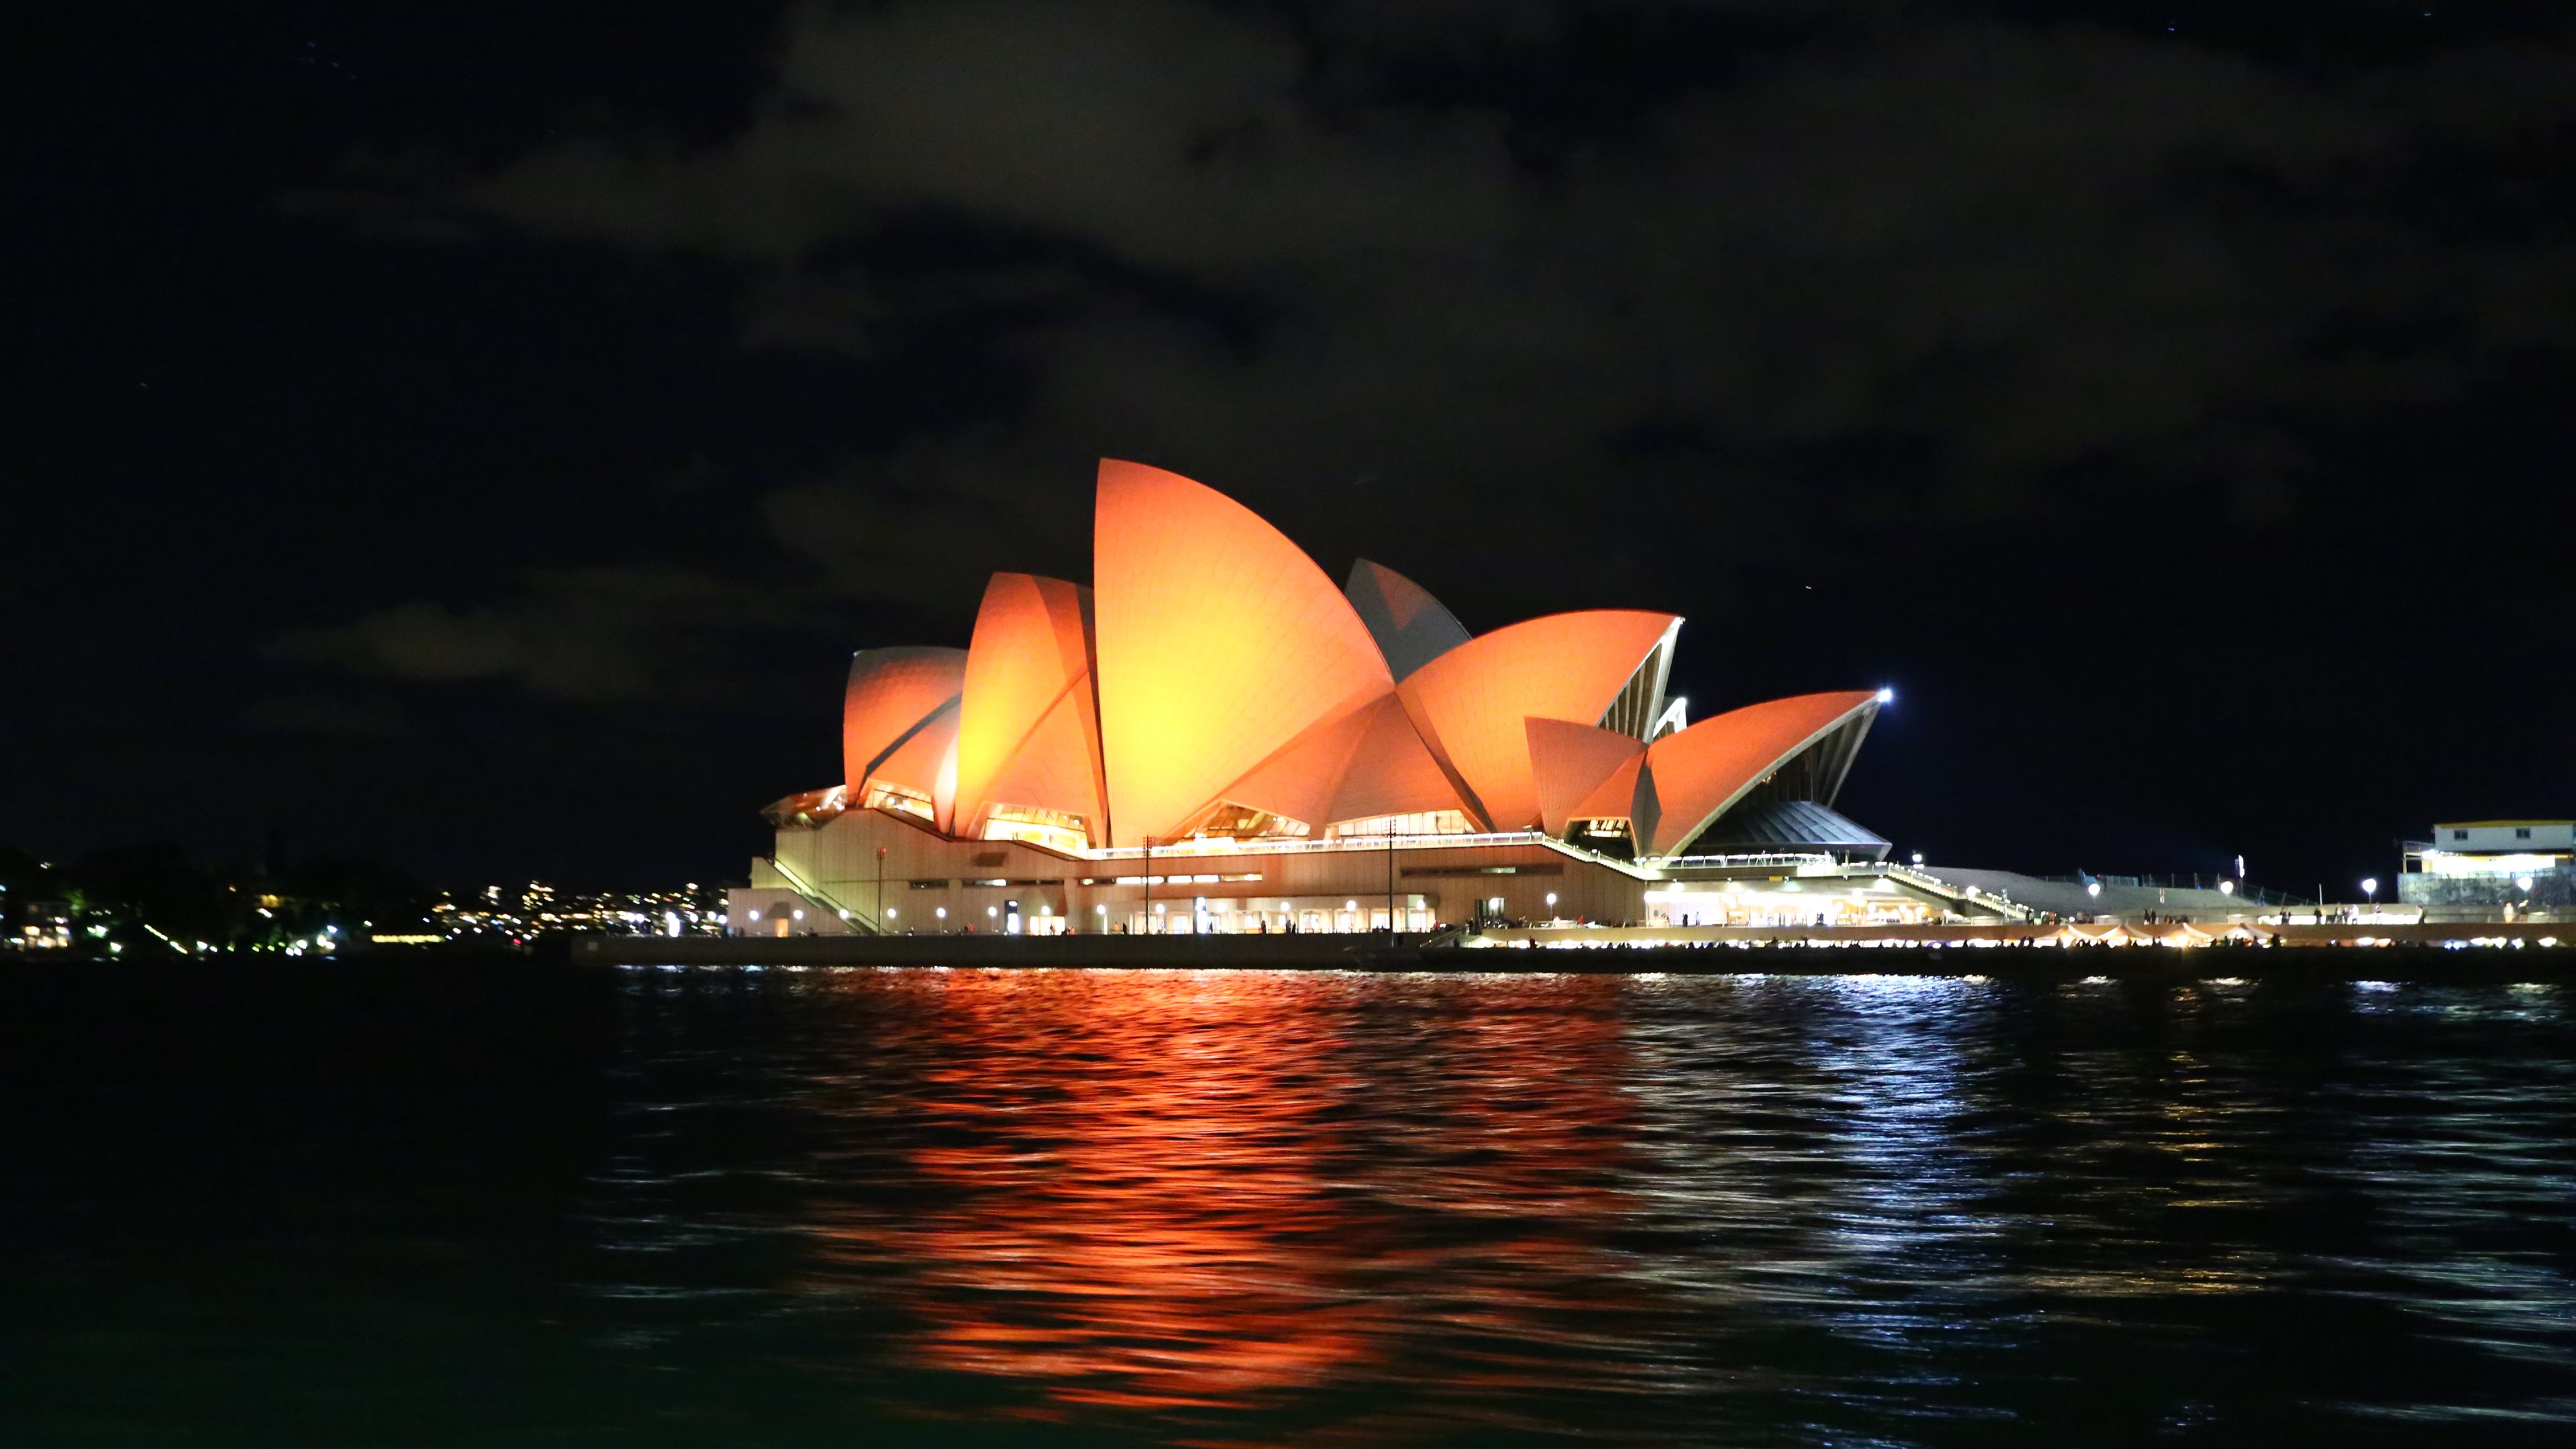 Sydney Opera House 4k Ultra HD Wallpaper and Background